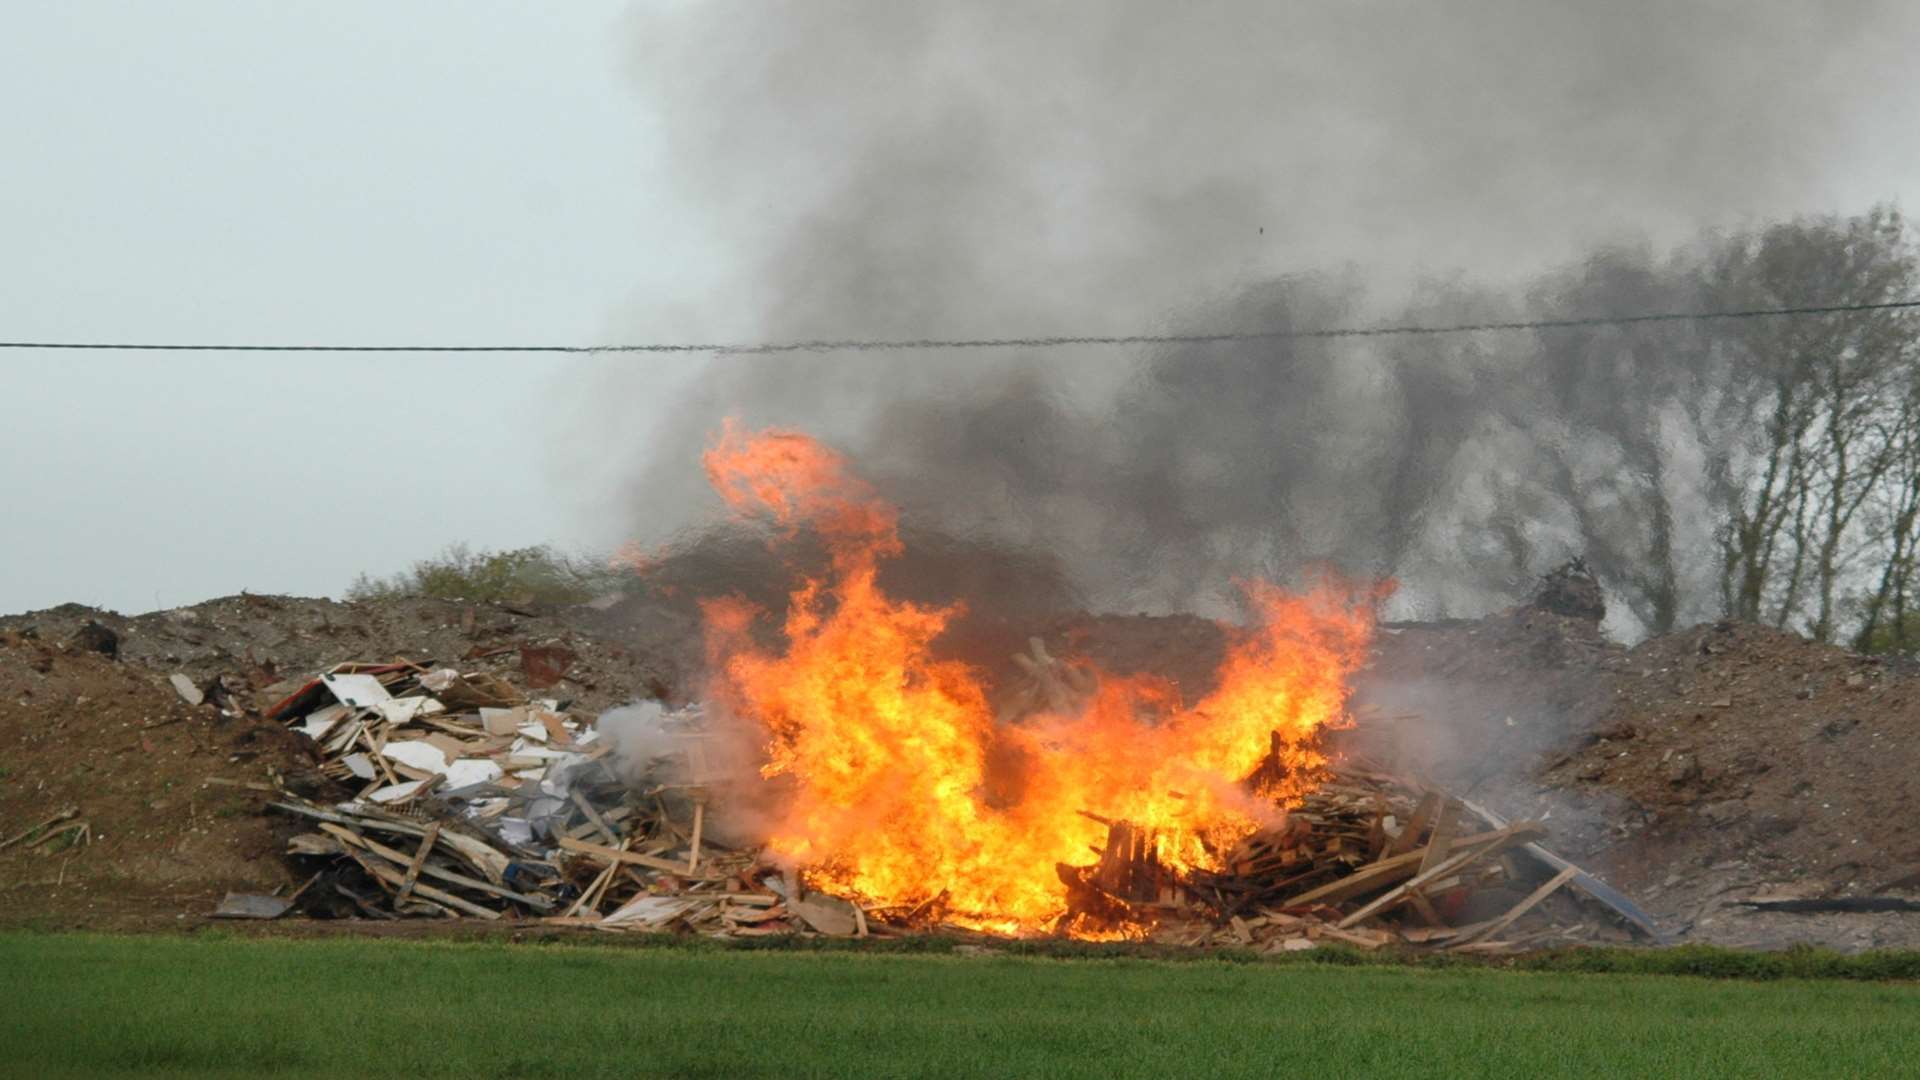 Photographs taken by environmental officers investigating illegal waste dumping at Marlow Farm near Lenham